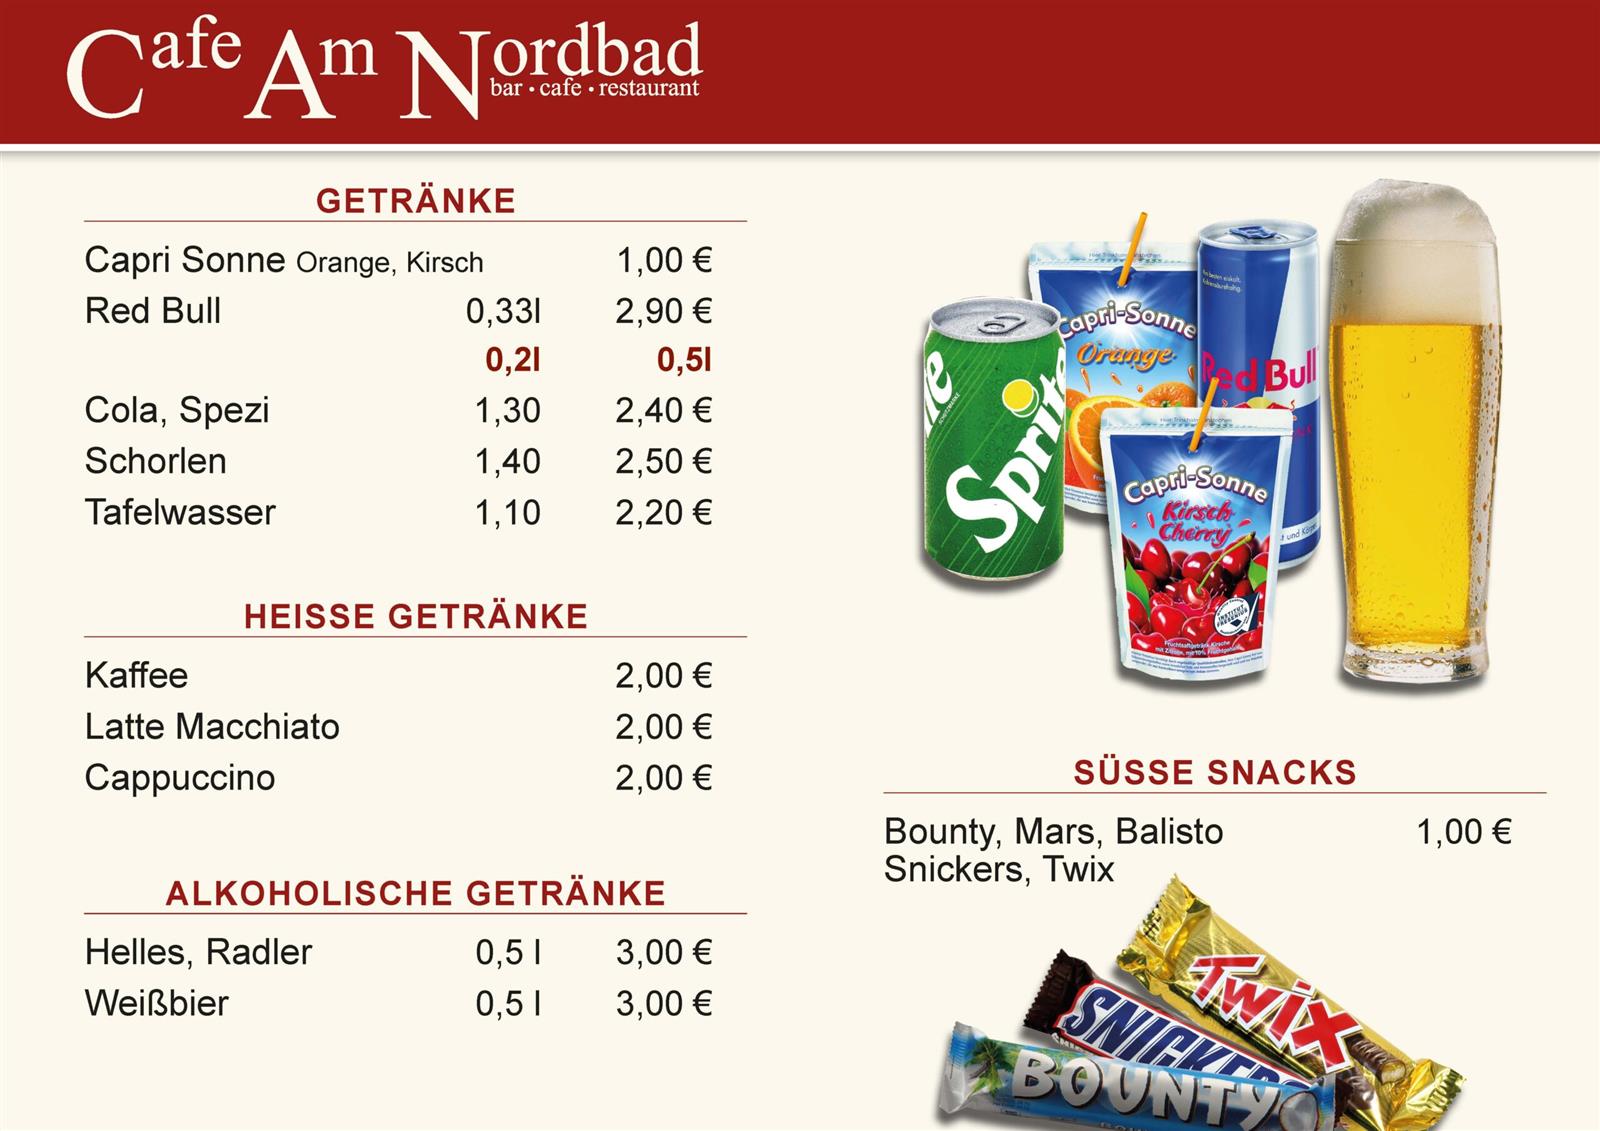 Preisliste_Bad-speisekarte-getraenkekarte-restaurant-gastronomie-dnz-networks.com2